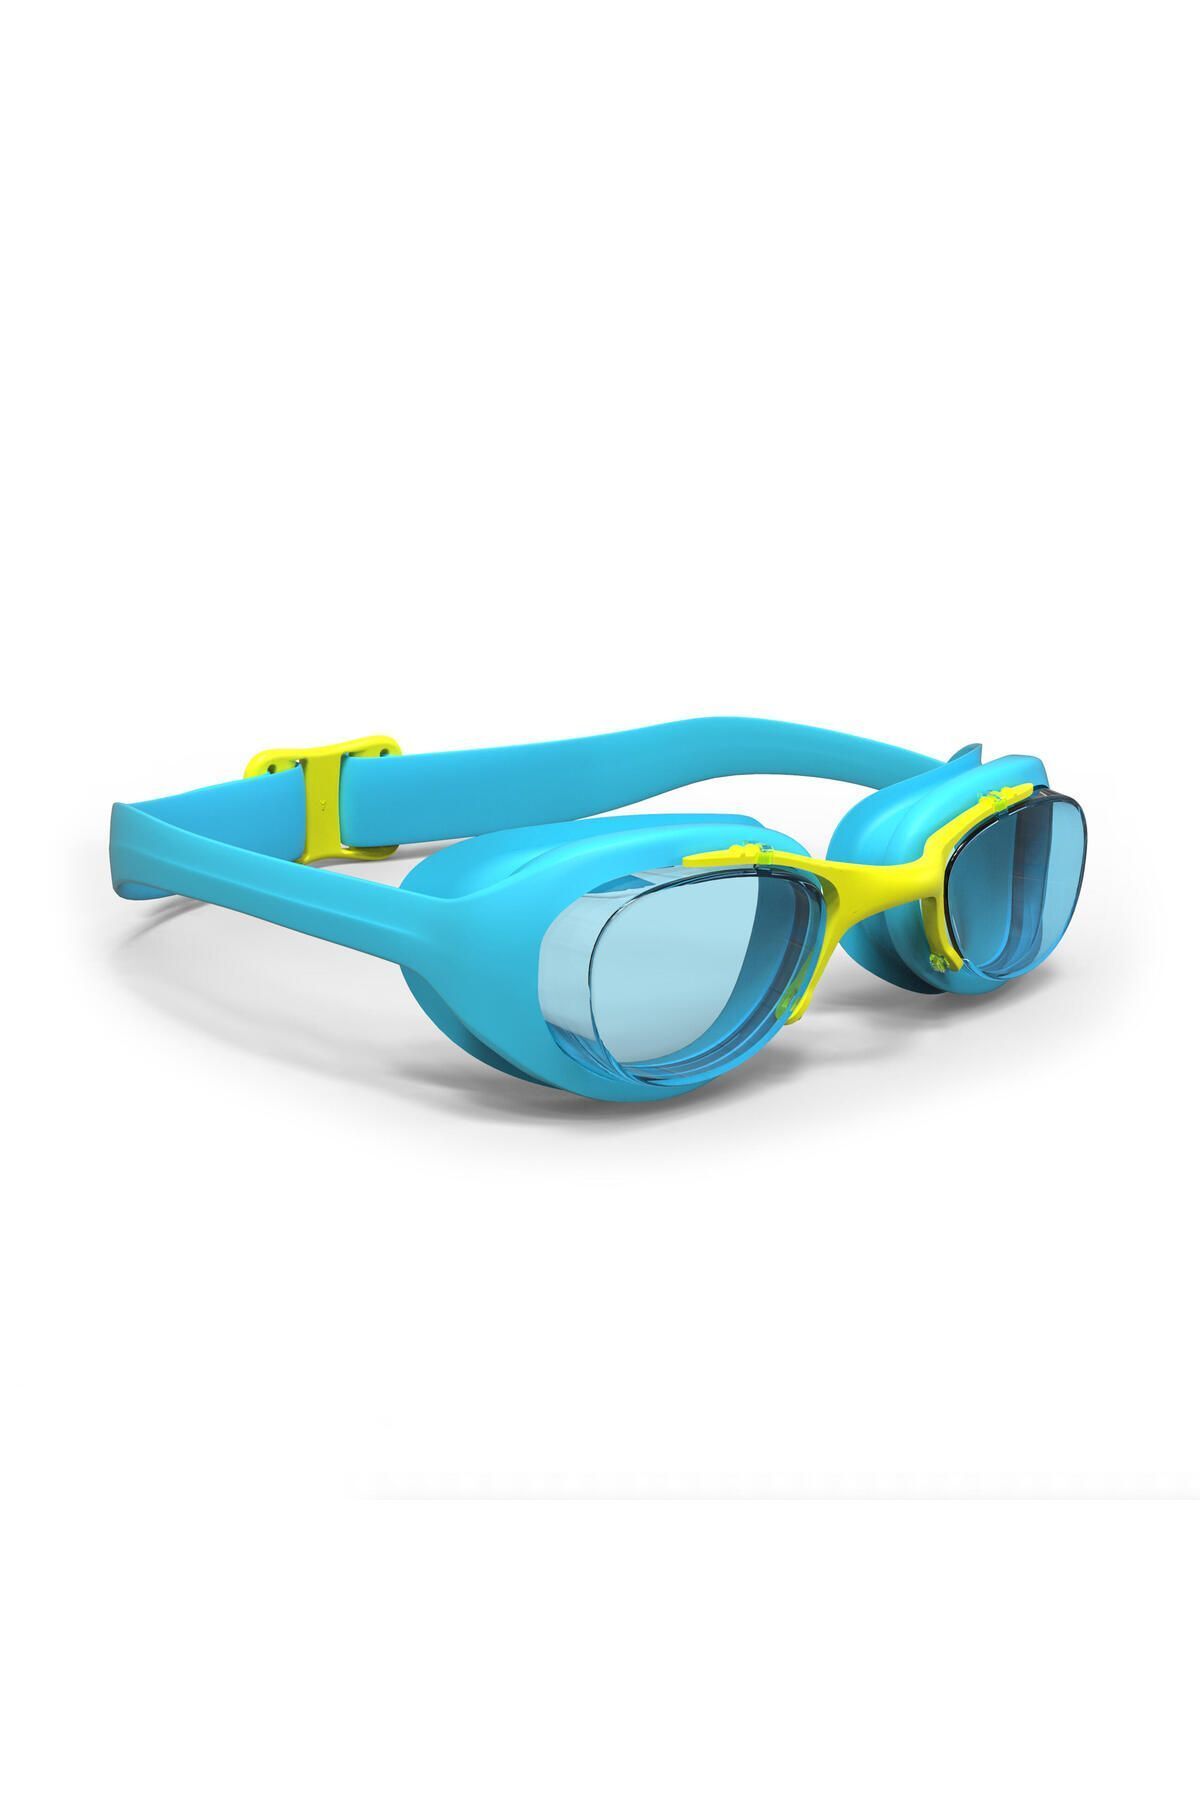 Decathlon Yüzücü Gözlüğü - S Boy - Mavi / Sarı - 100 Xbase